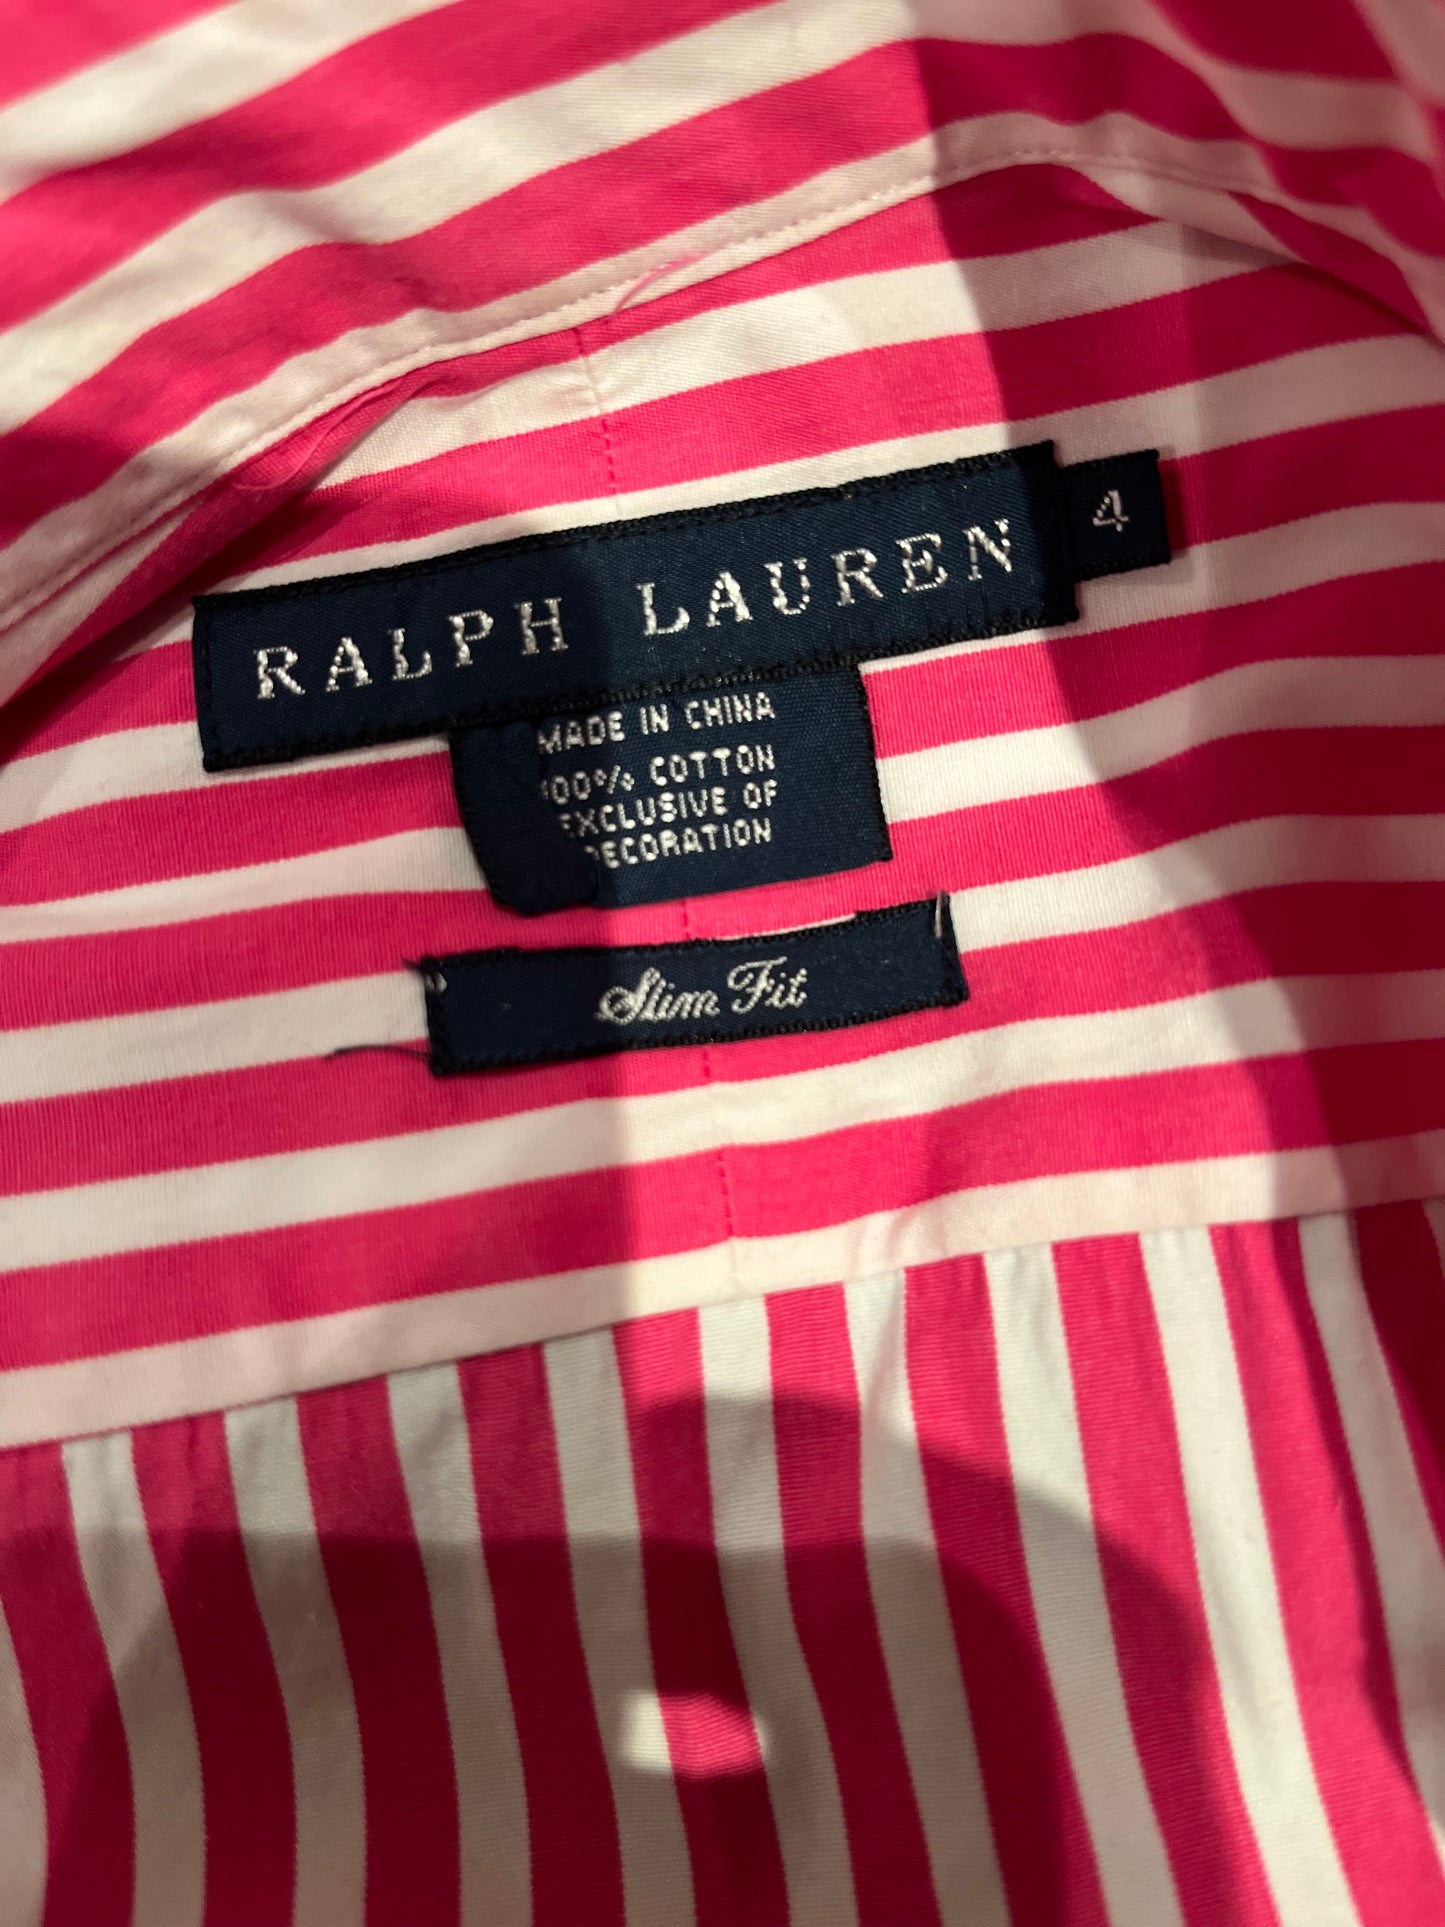 Ralph Lauren Women’s 100% Cotton Pink White Stripe Shirt Size 4 Slim Fit